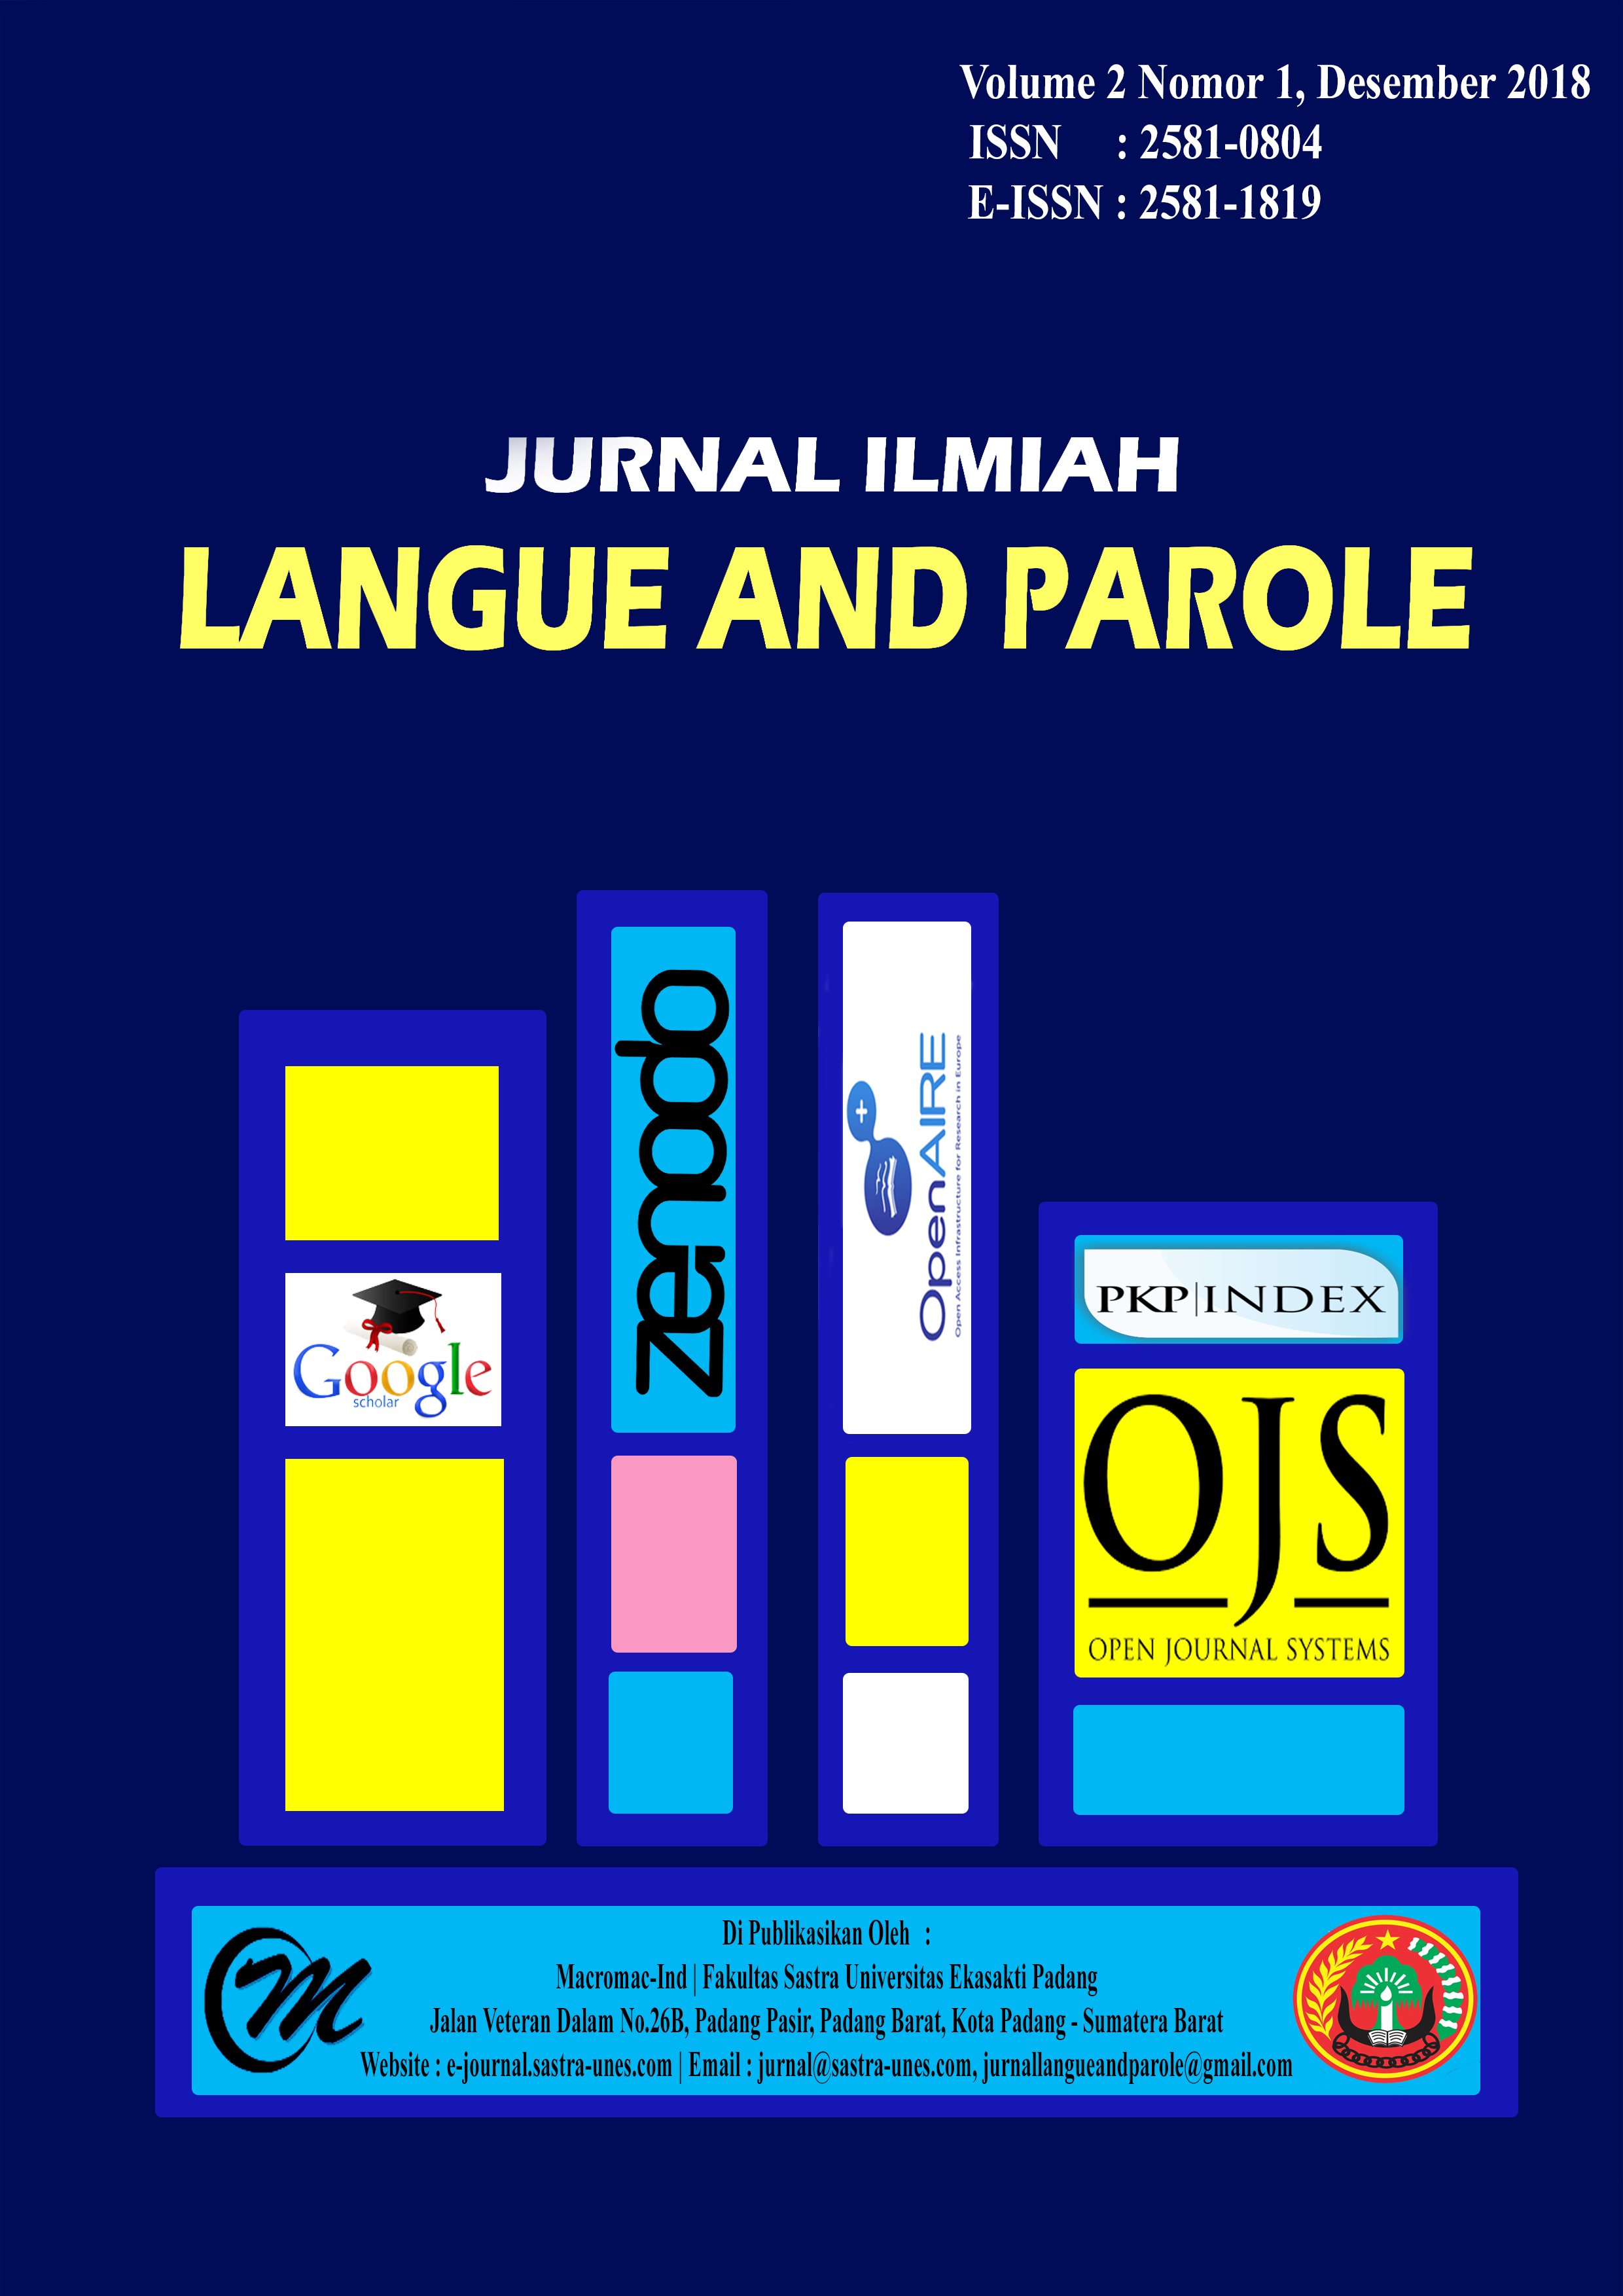 Jurnal JILP (Jurnal Ilmiah Langue and Parole) #Jurnal JILP